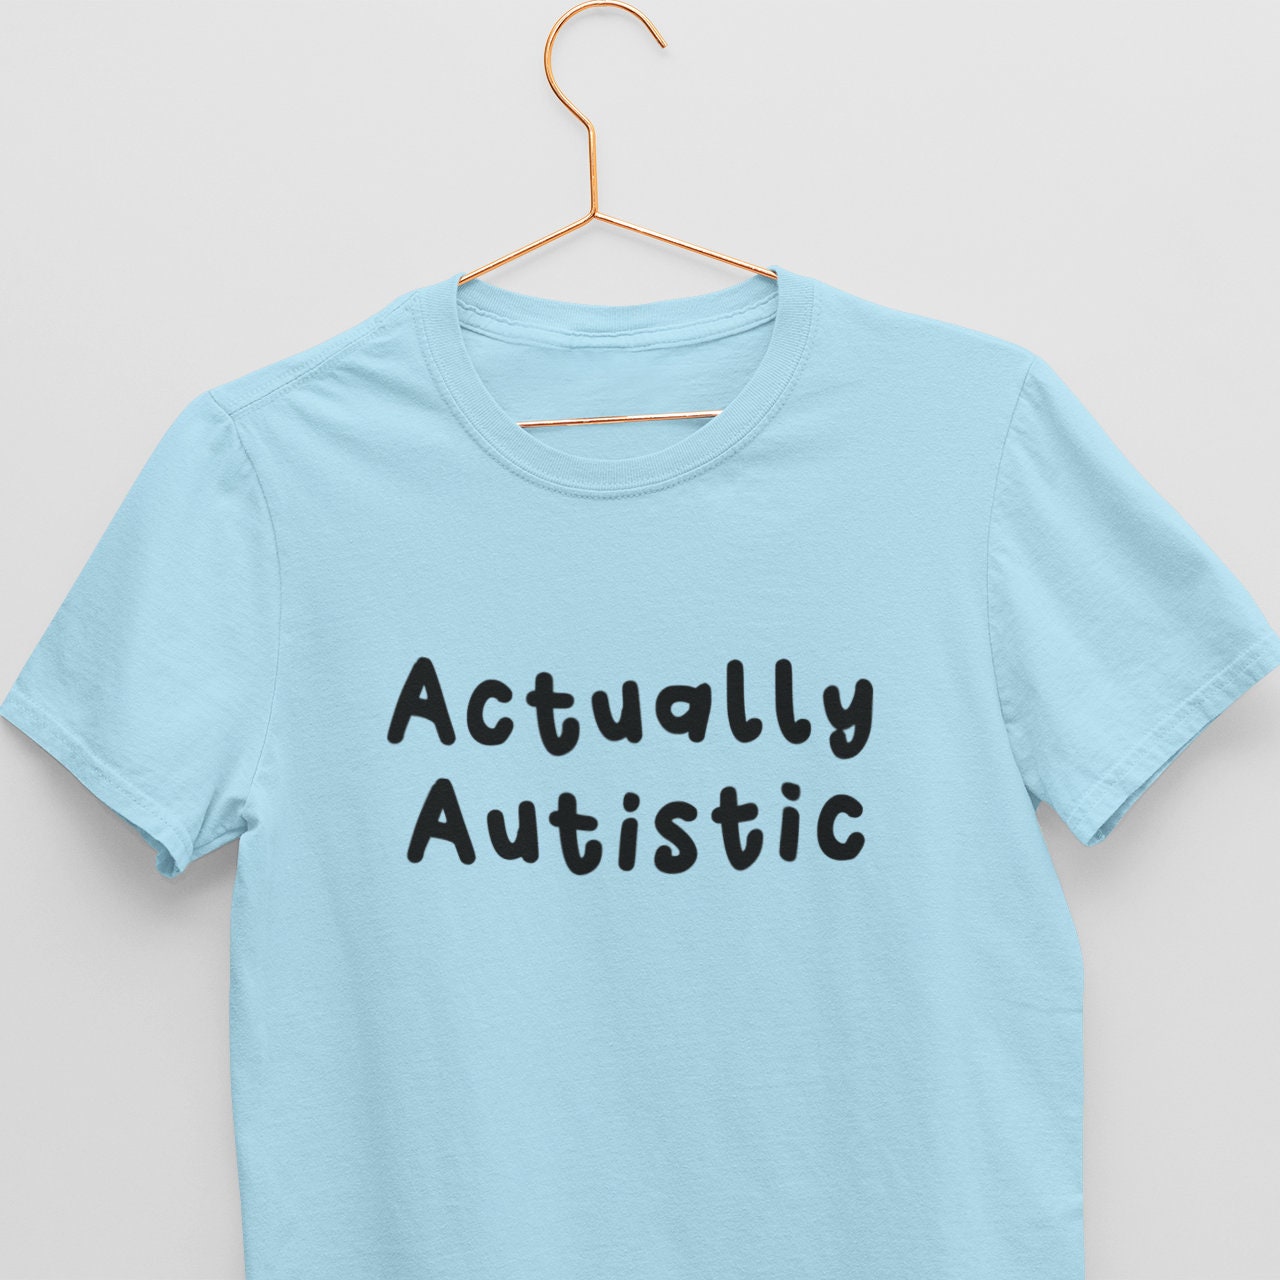 Actually Autistic TShirt | Autism Awareness - Autism Gifts - Neurodiverse - Neurodiversity